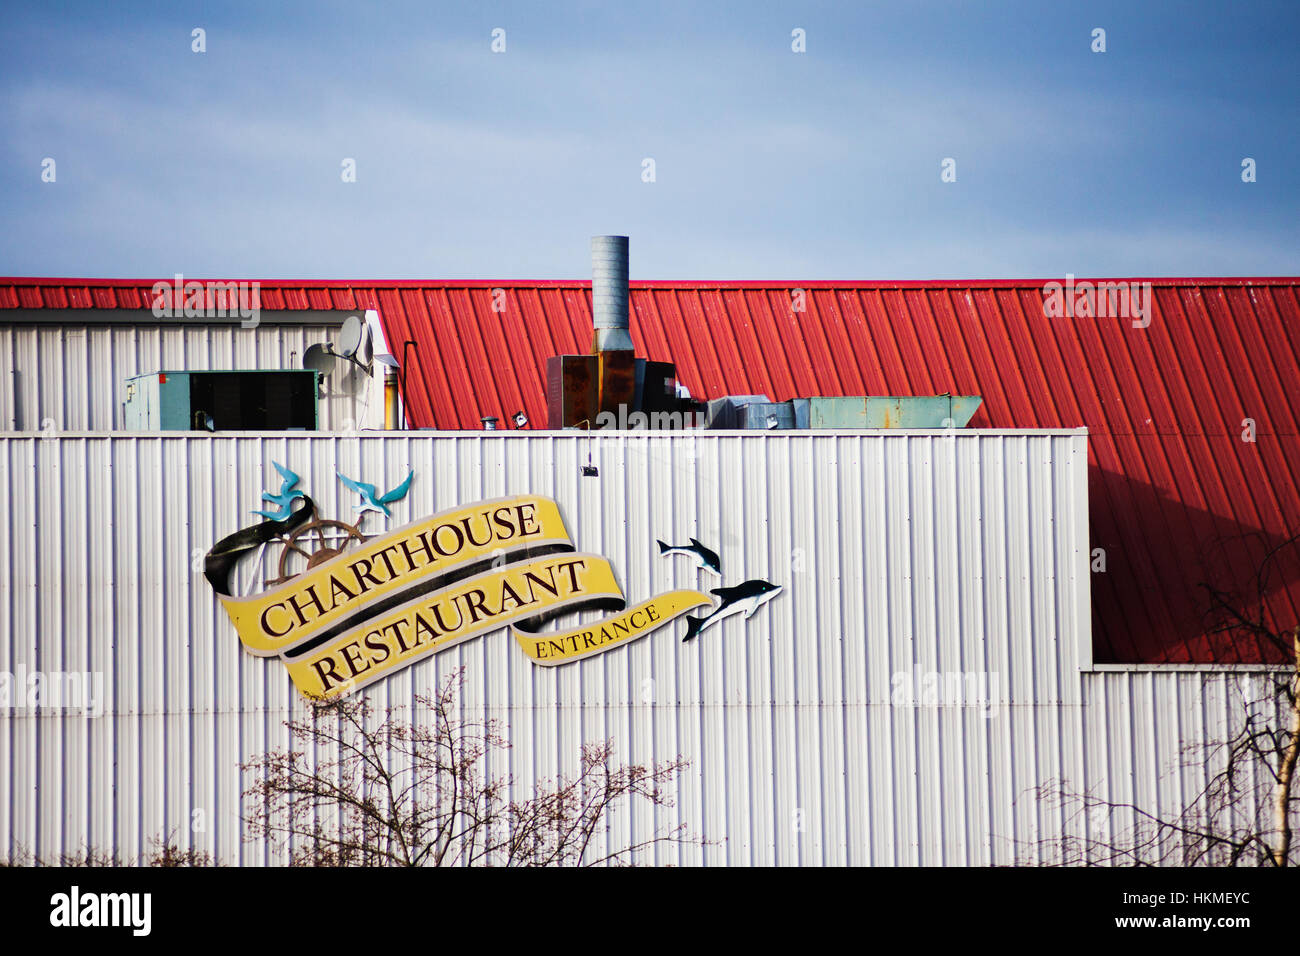 Charthouse restaurant entrance sign.  Steveston, BC, Canada Stock Photo